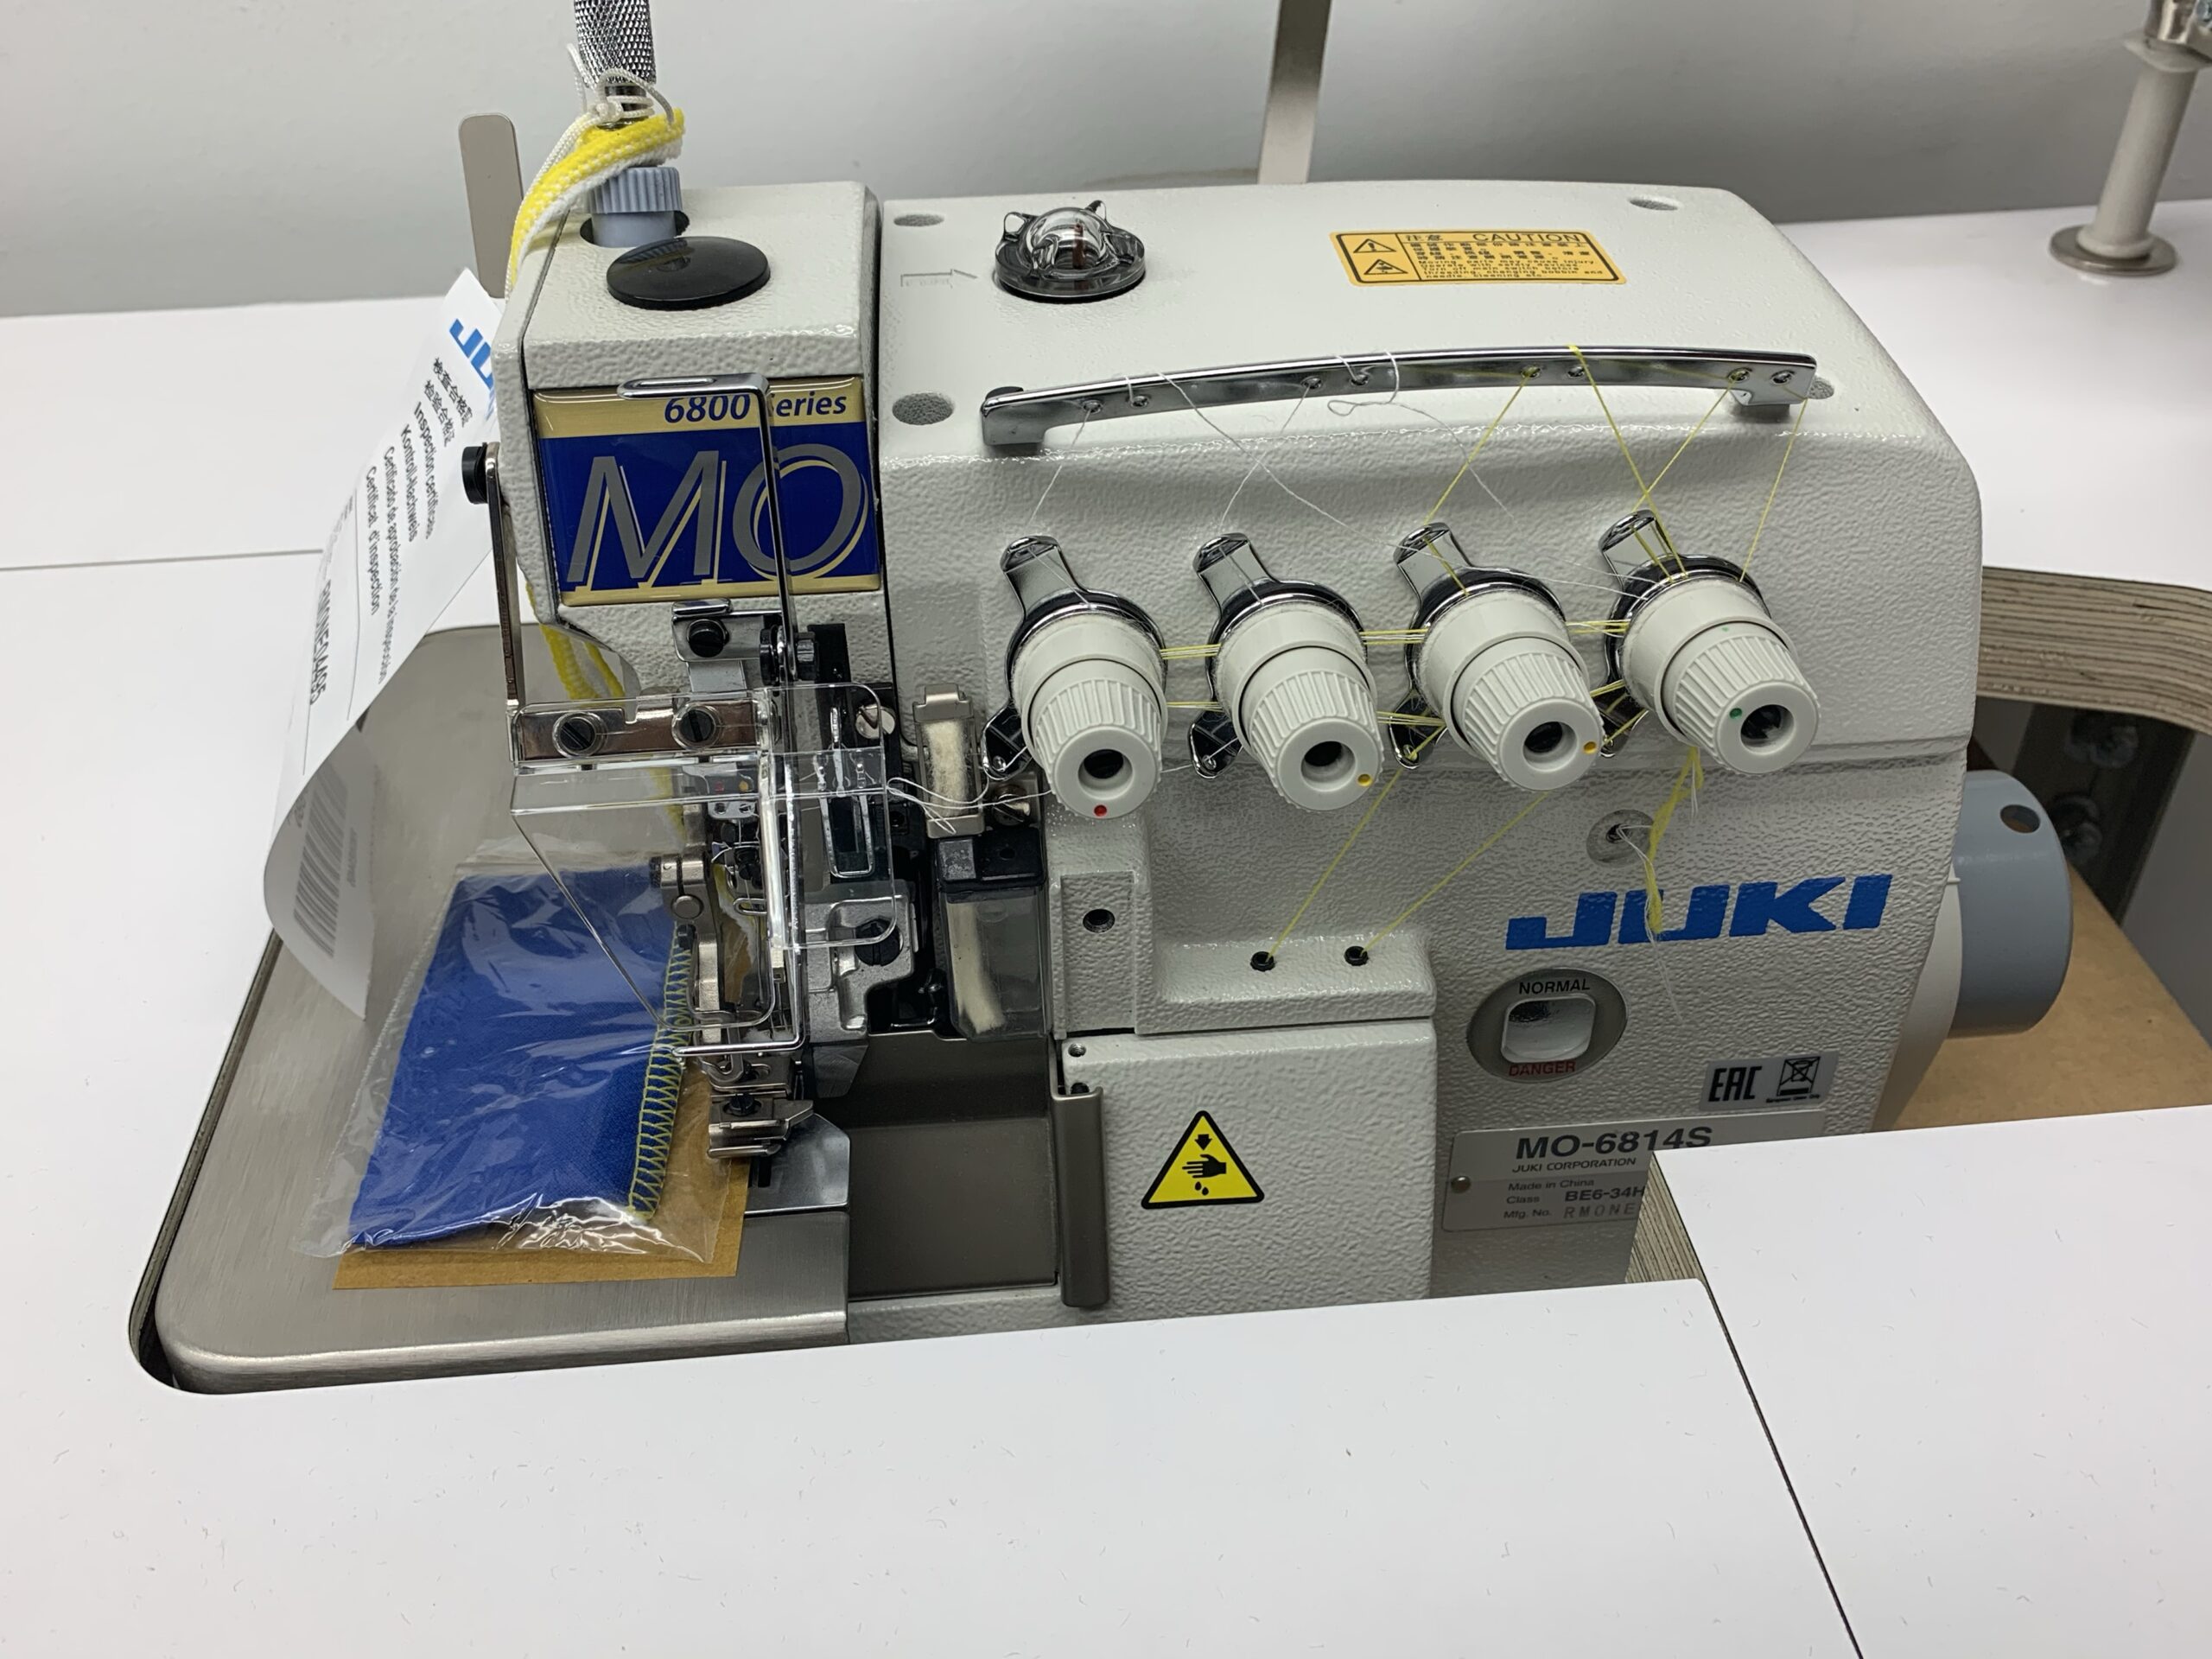 Juki MO-6814S High-speed, Overlock / Safety Stitch Machine